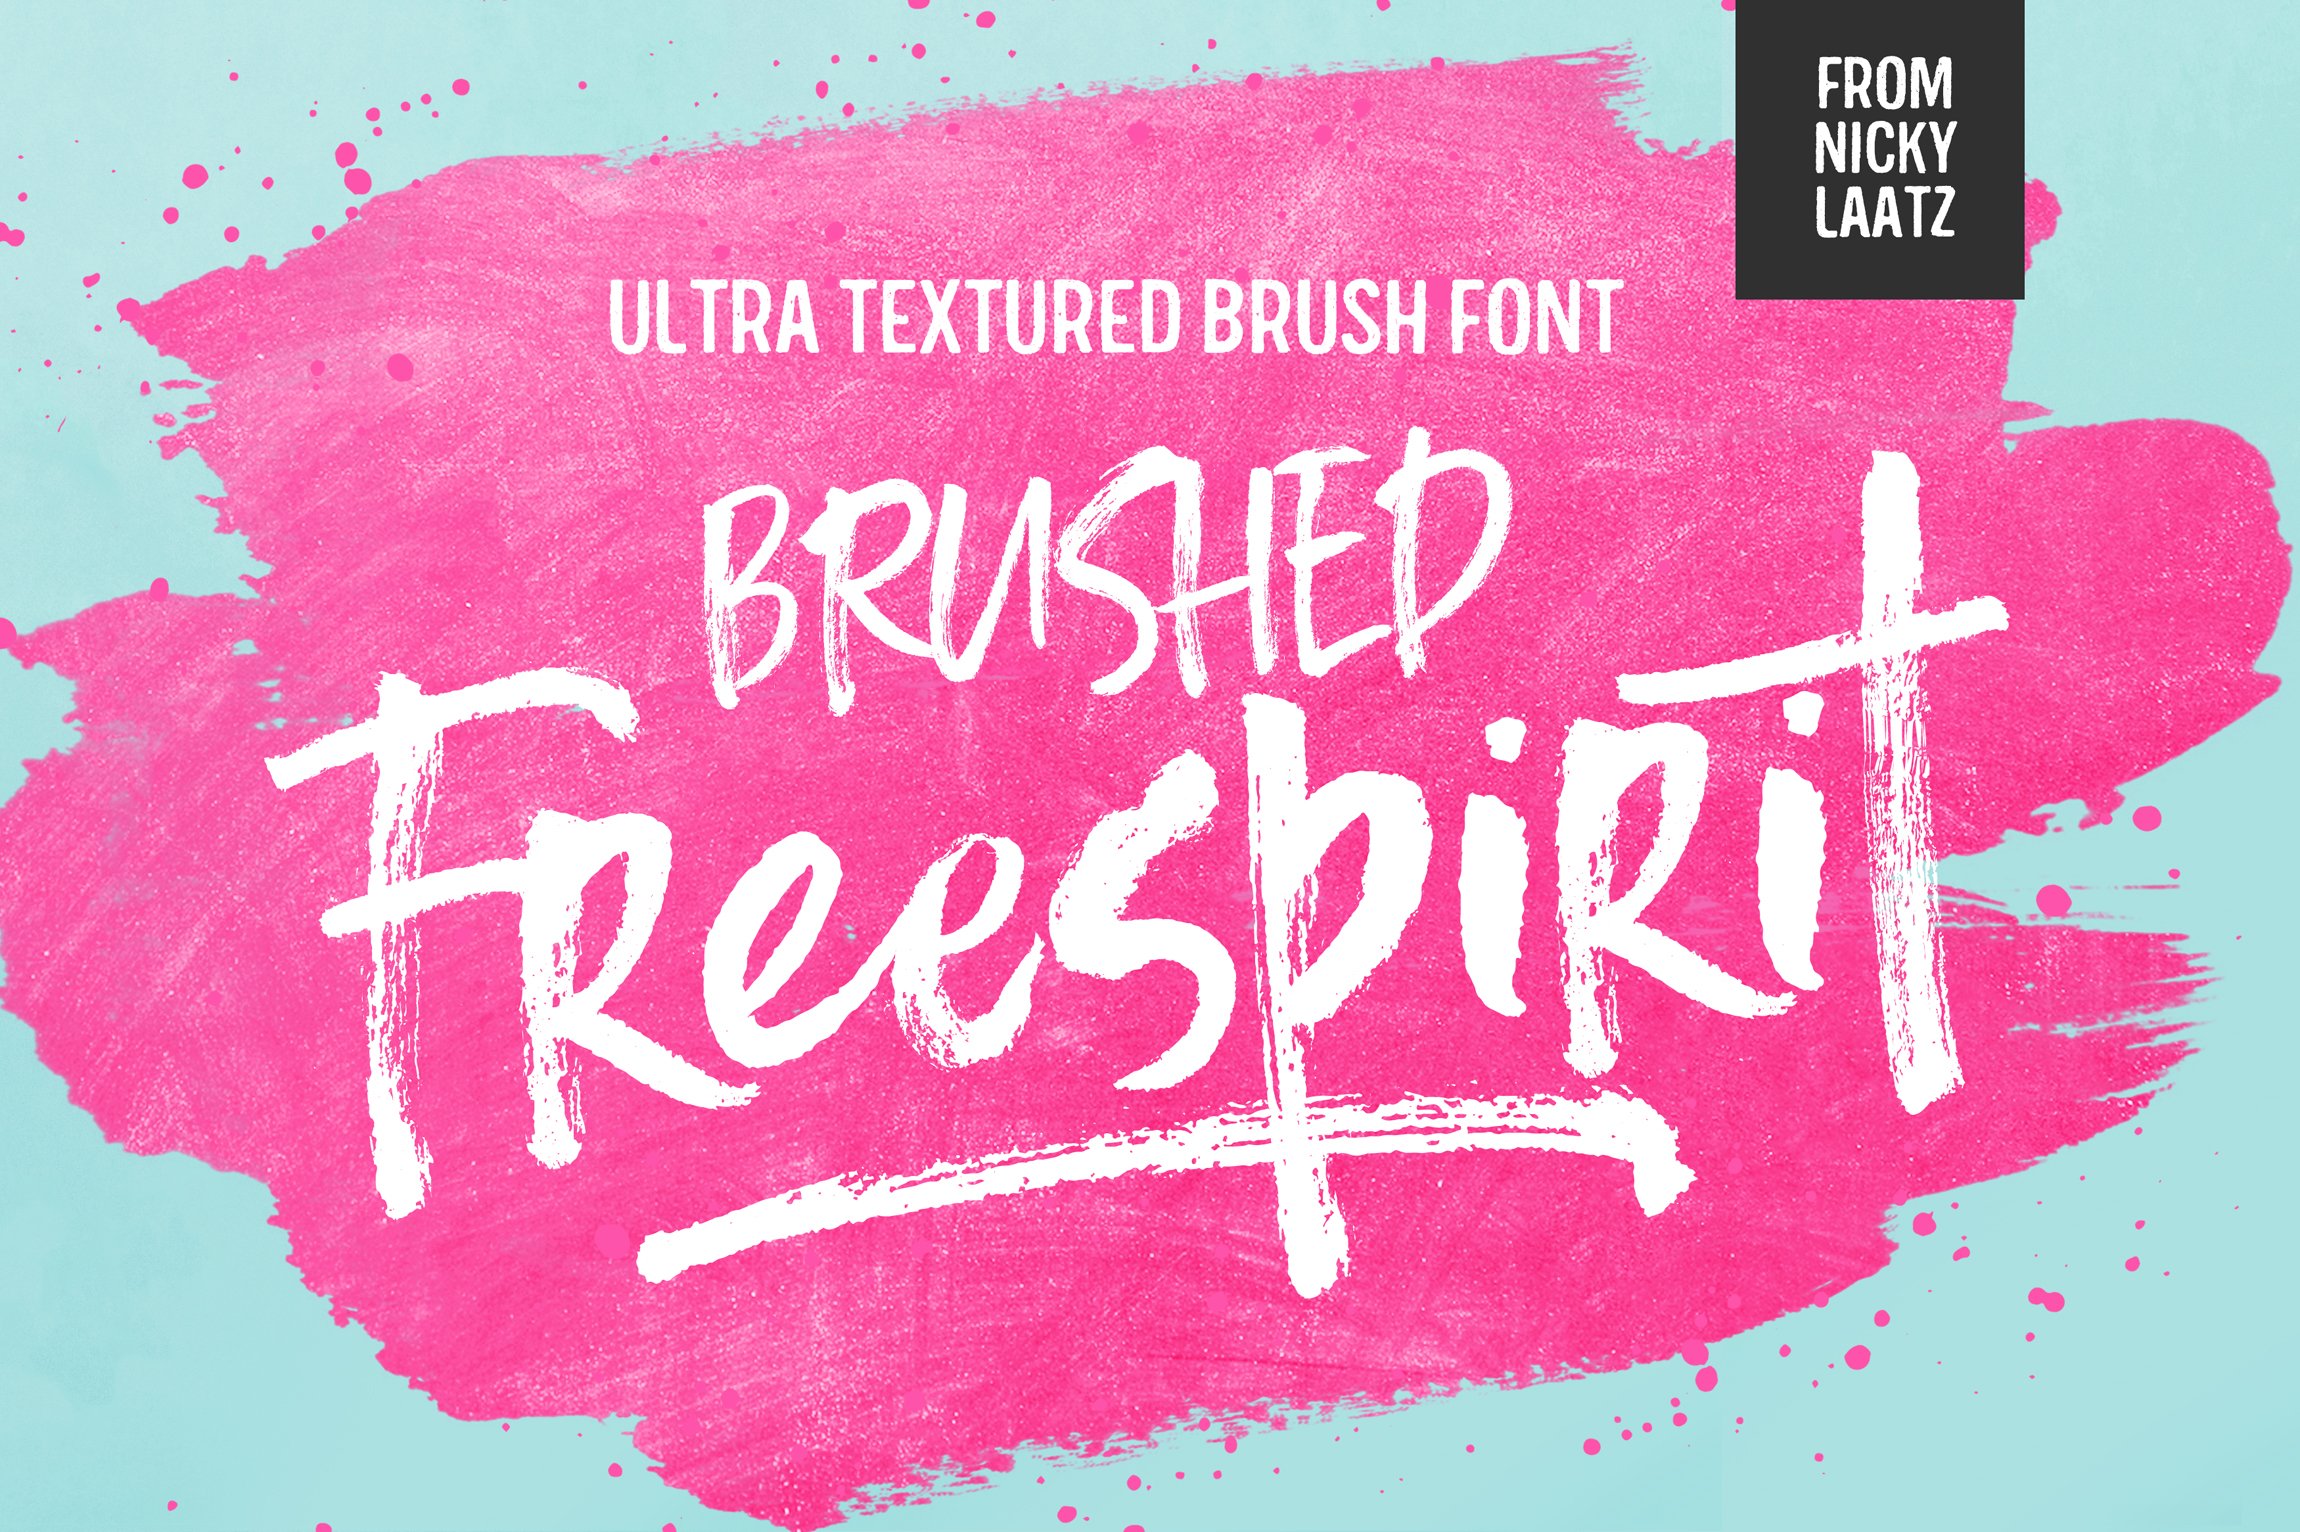 Freespirit Brush Fonts cover image.